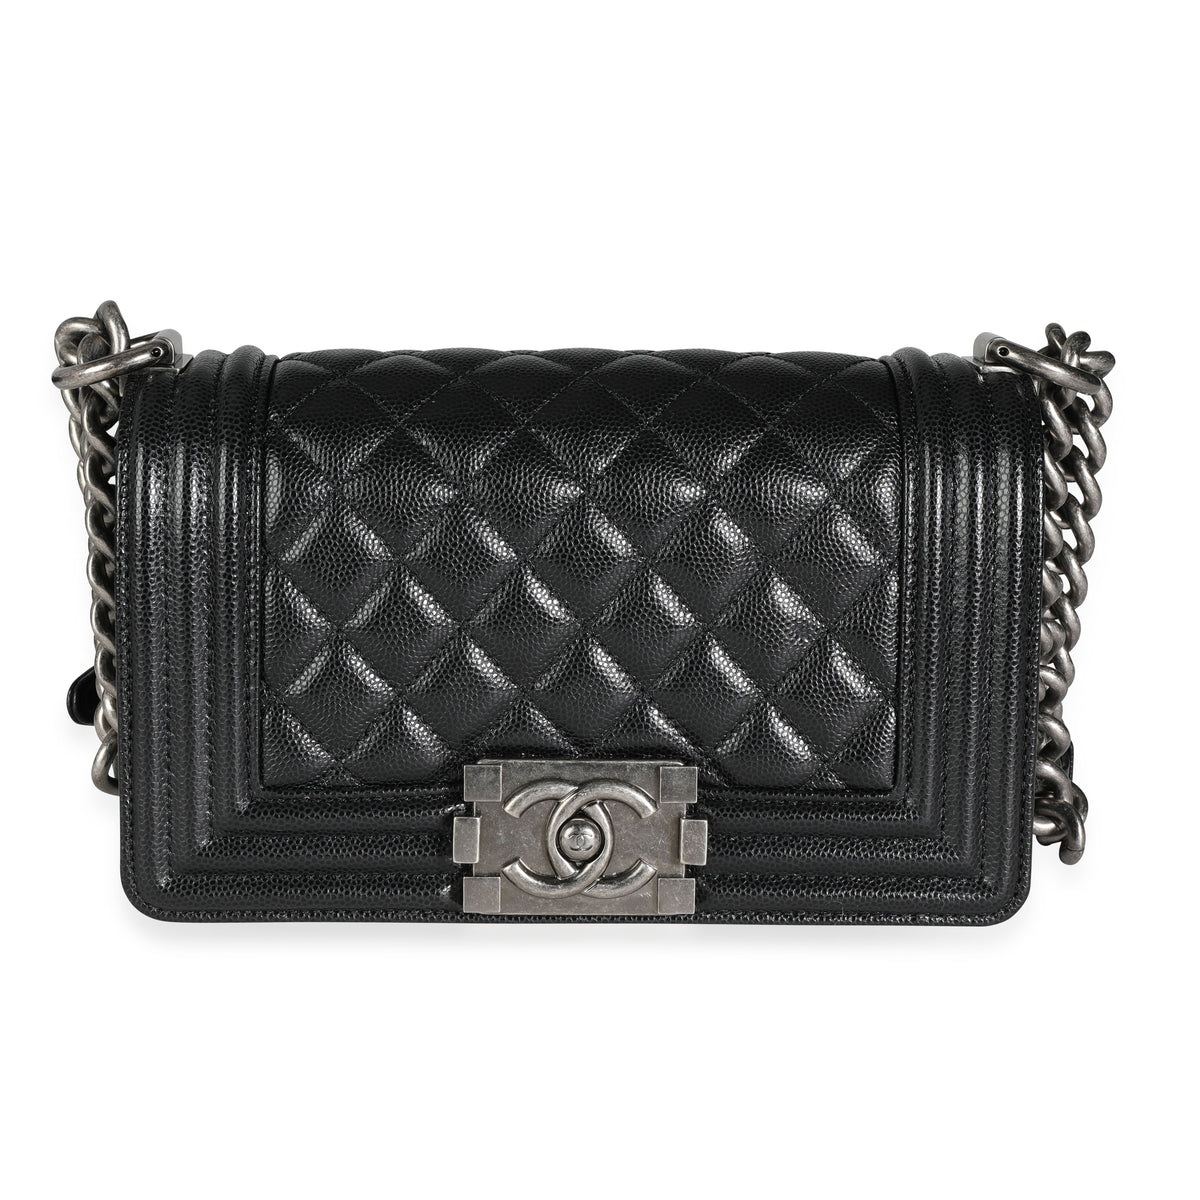 Chanel Small Boy bag of black caviar leather 